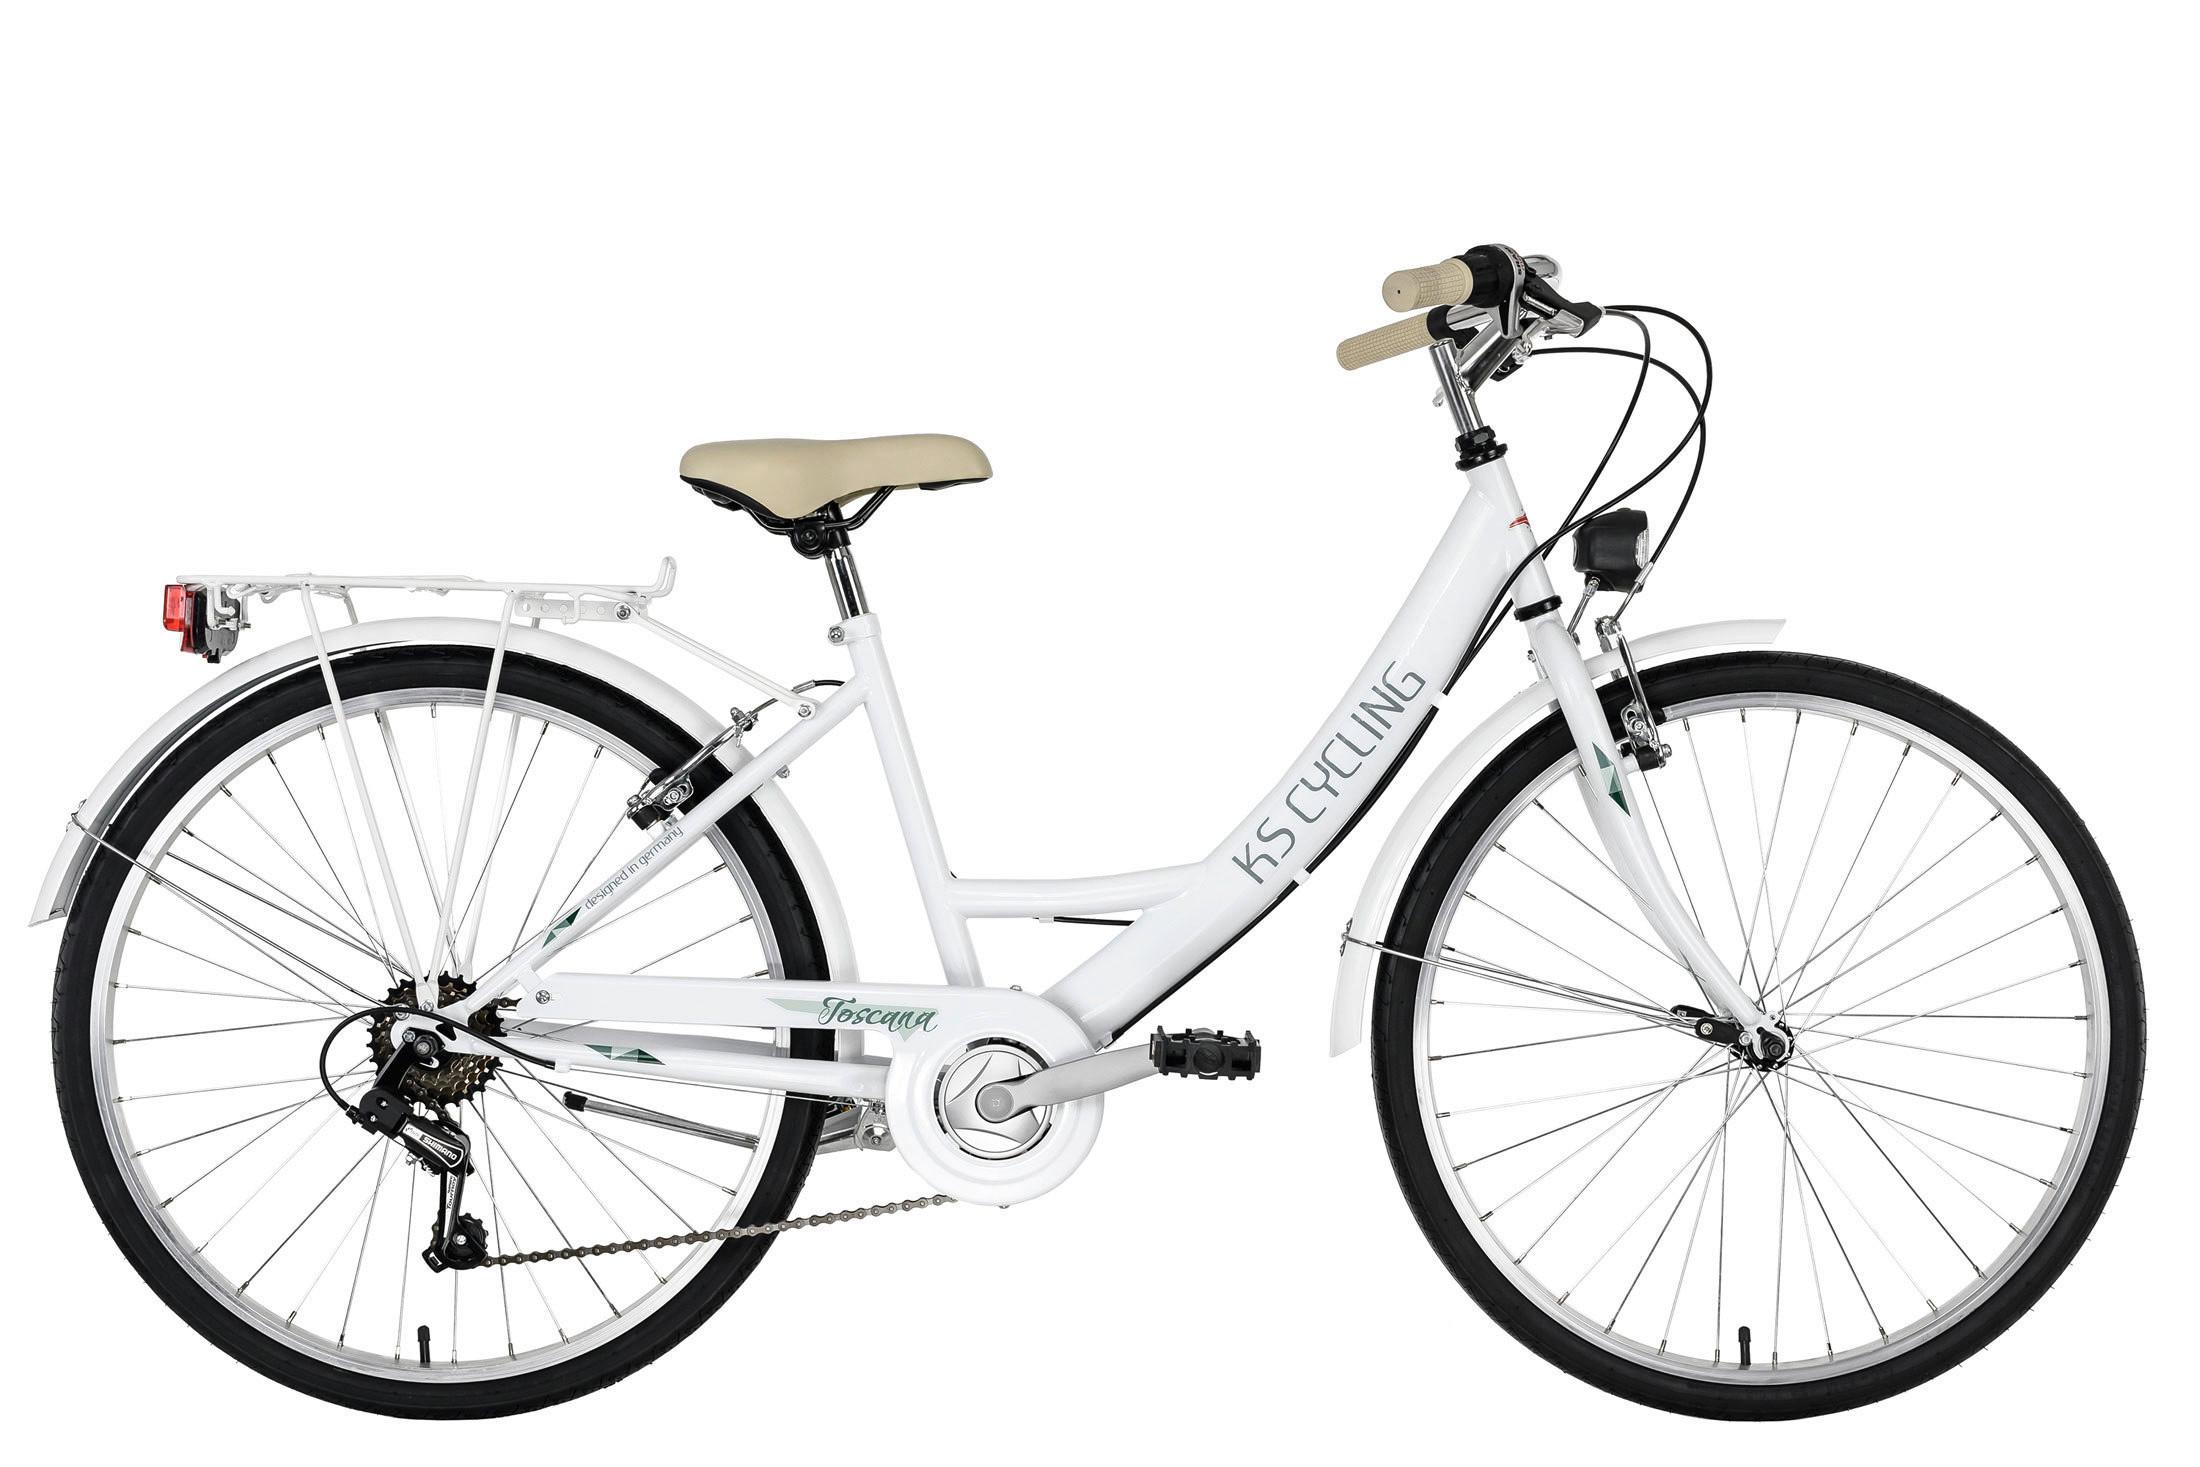 Kral Lear Kuzeydoğu değiştirmek  Damen-Fahrrad in Weiß mit eleganten beigen Detail